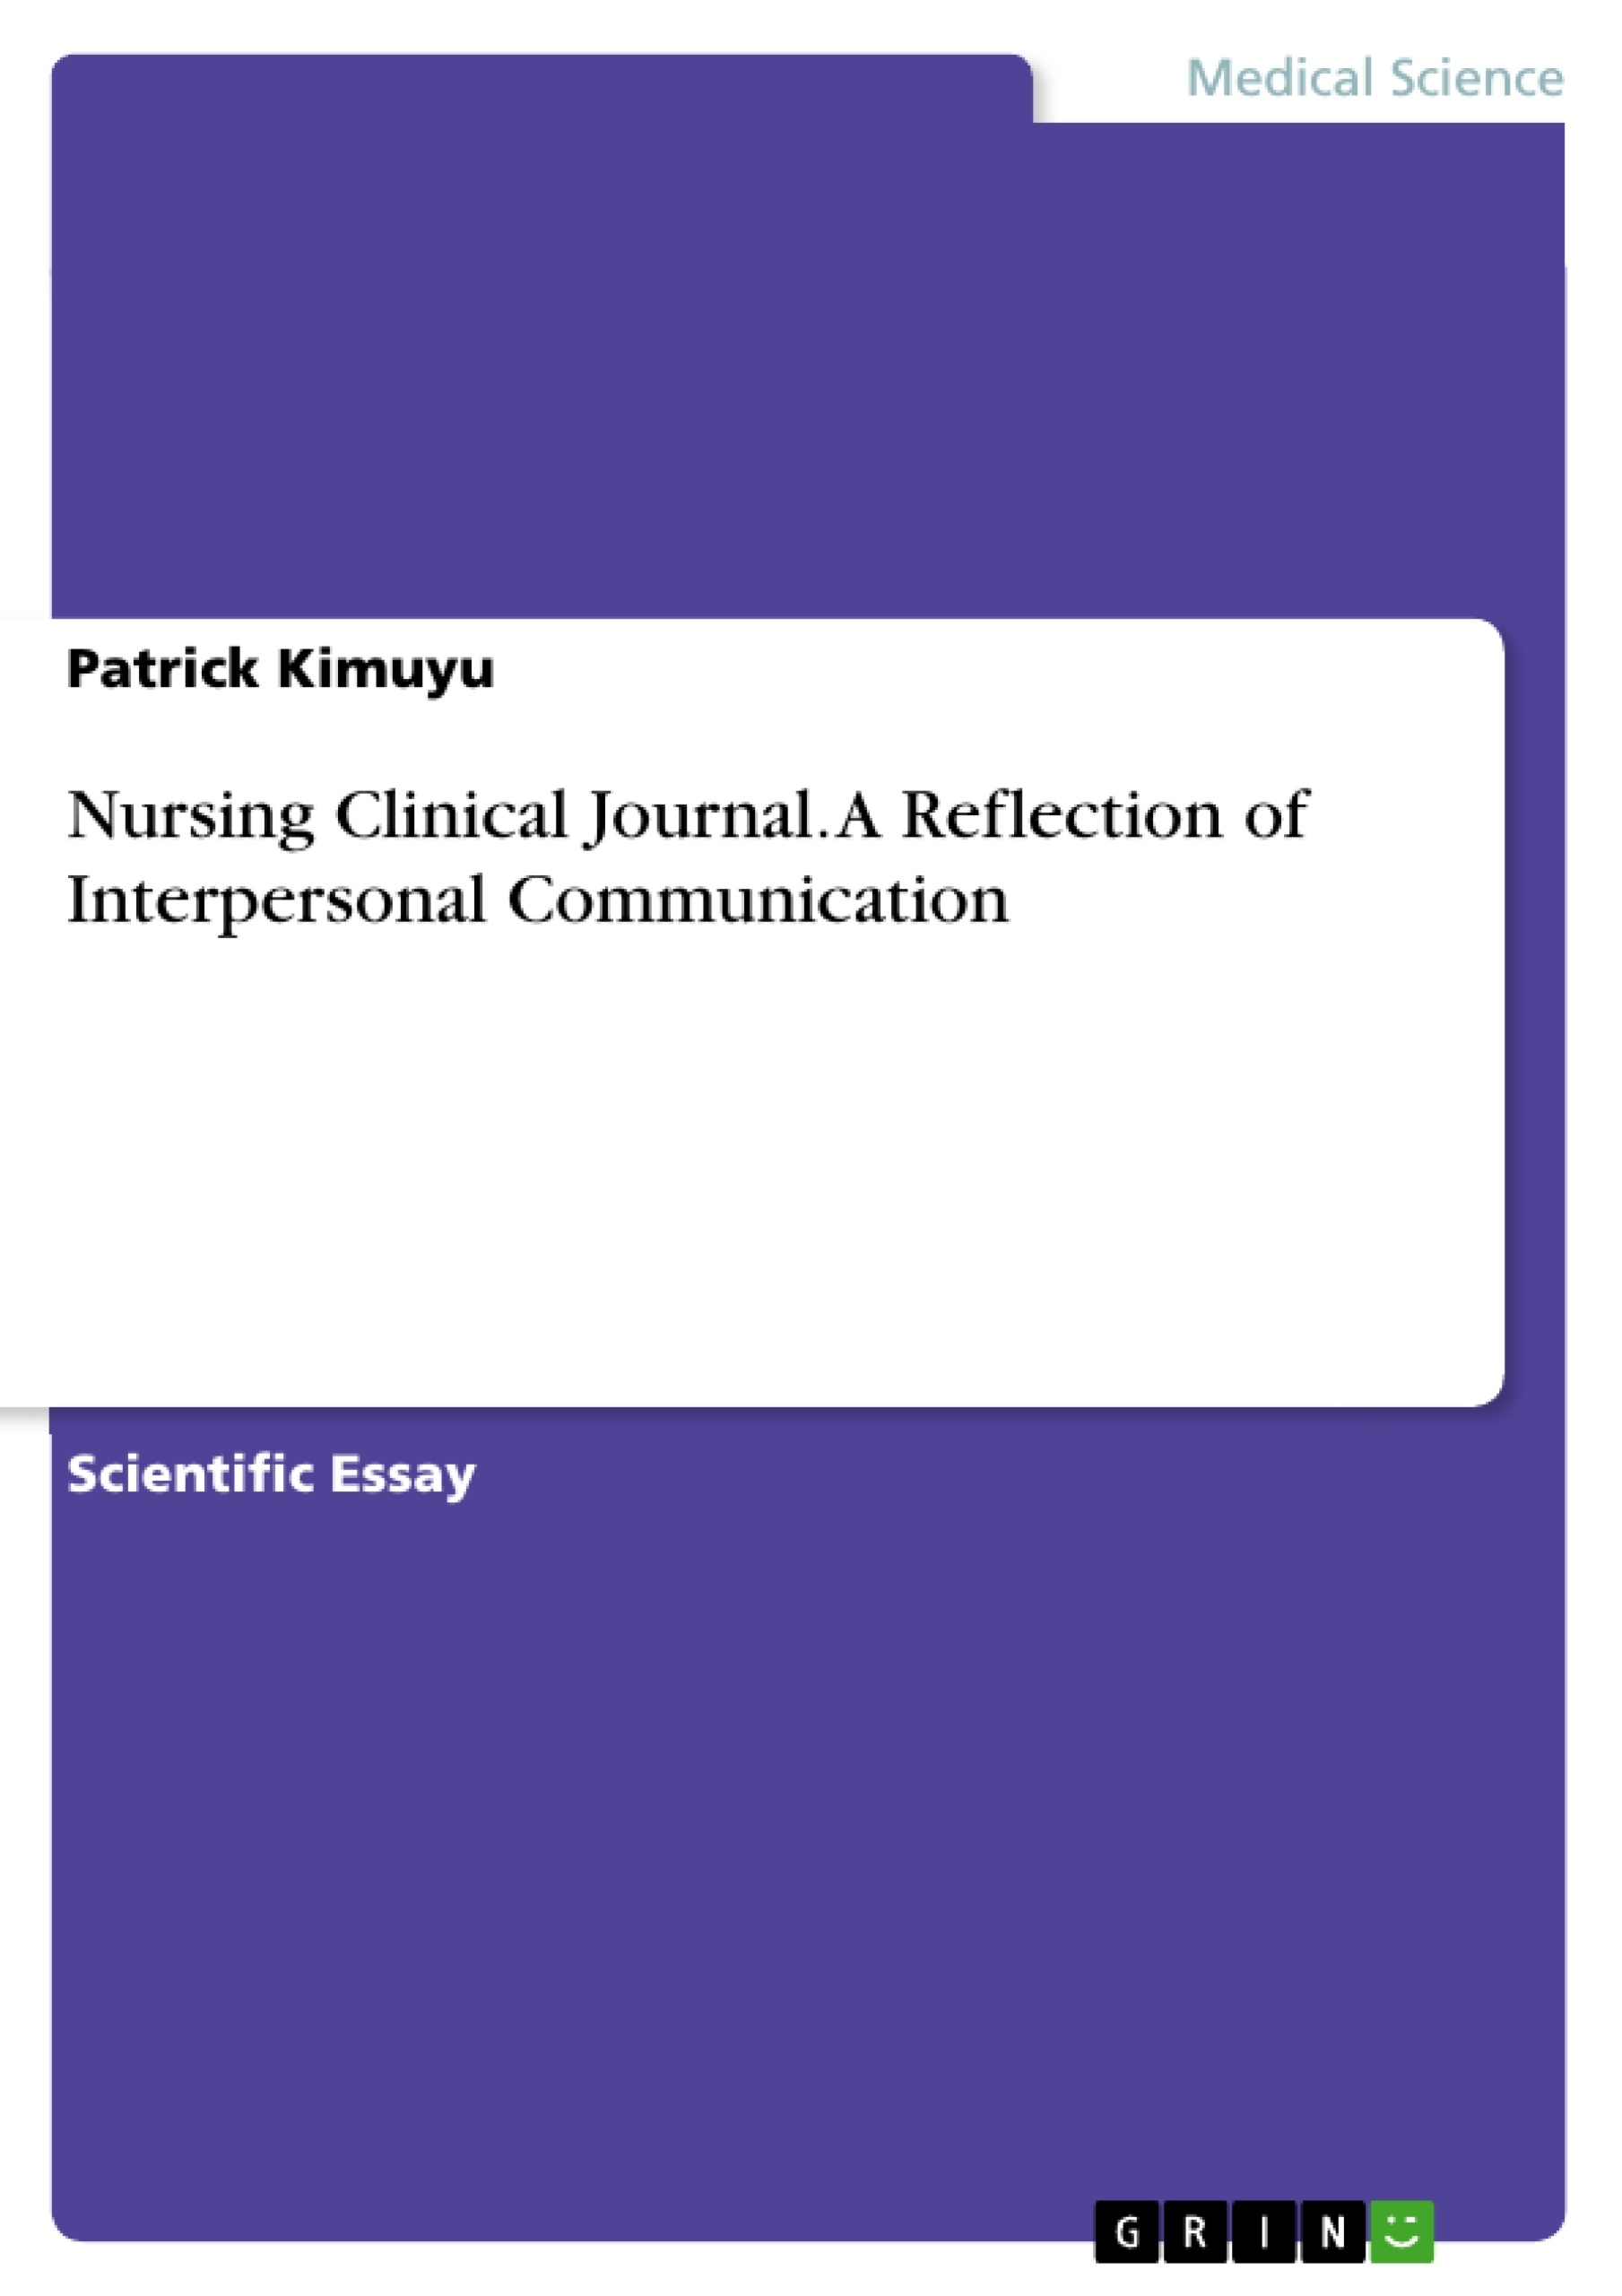 intrapersonal communication essay